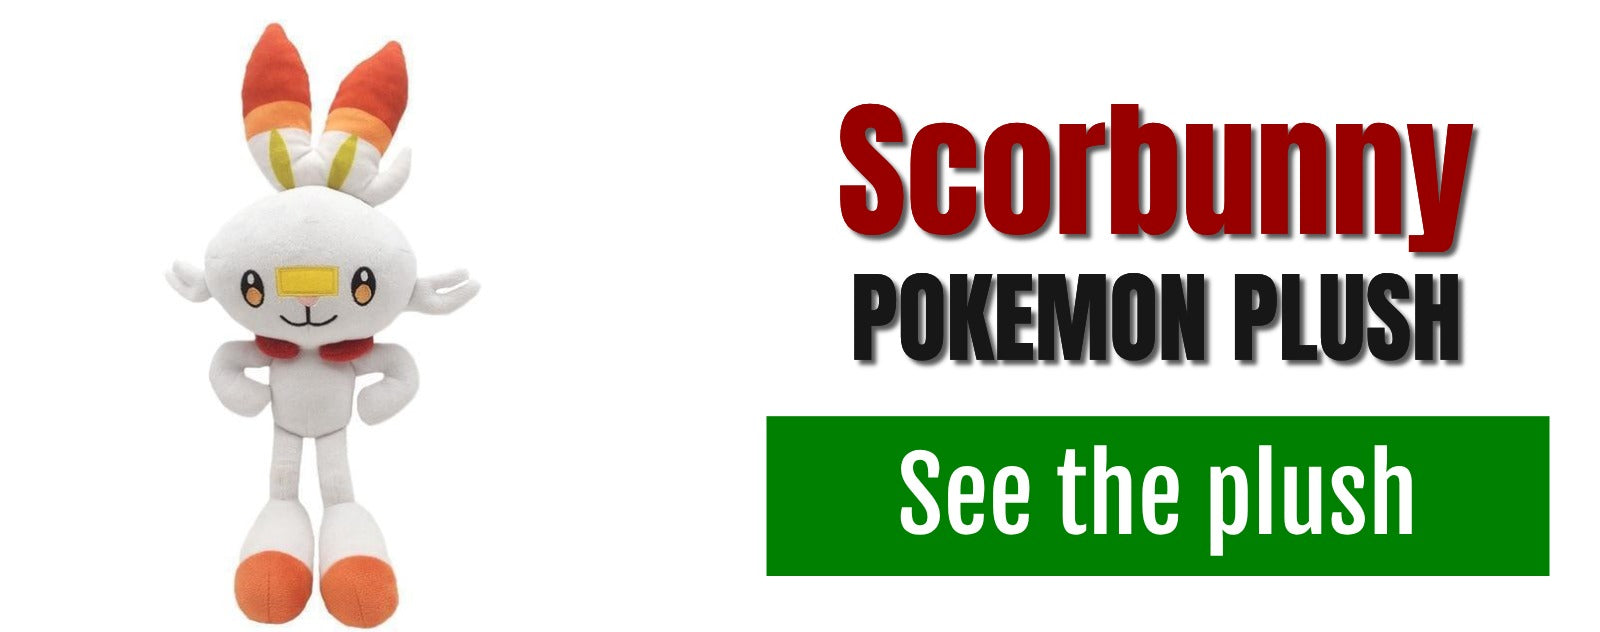 Scorbunny pokemon plush banner pokemon faction